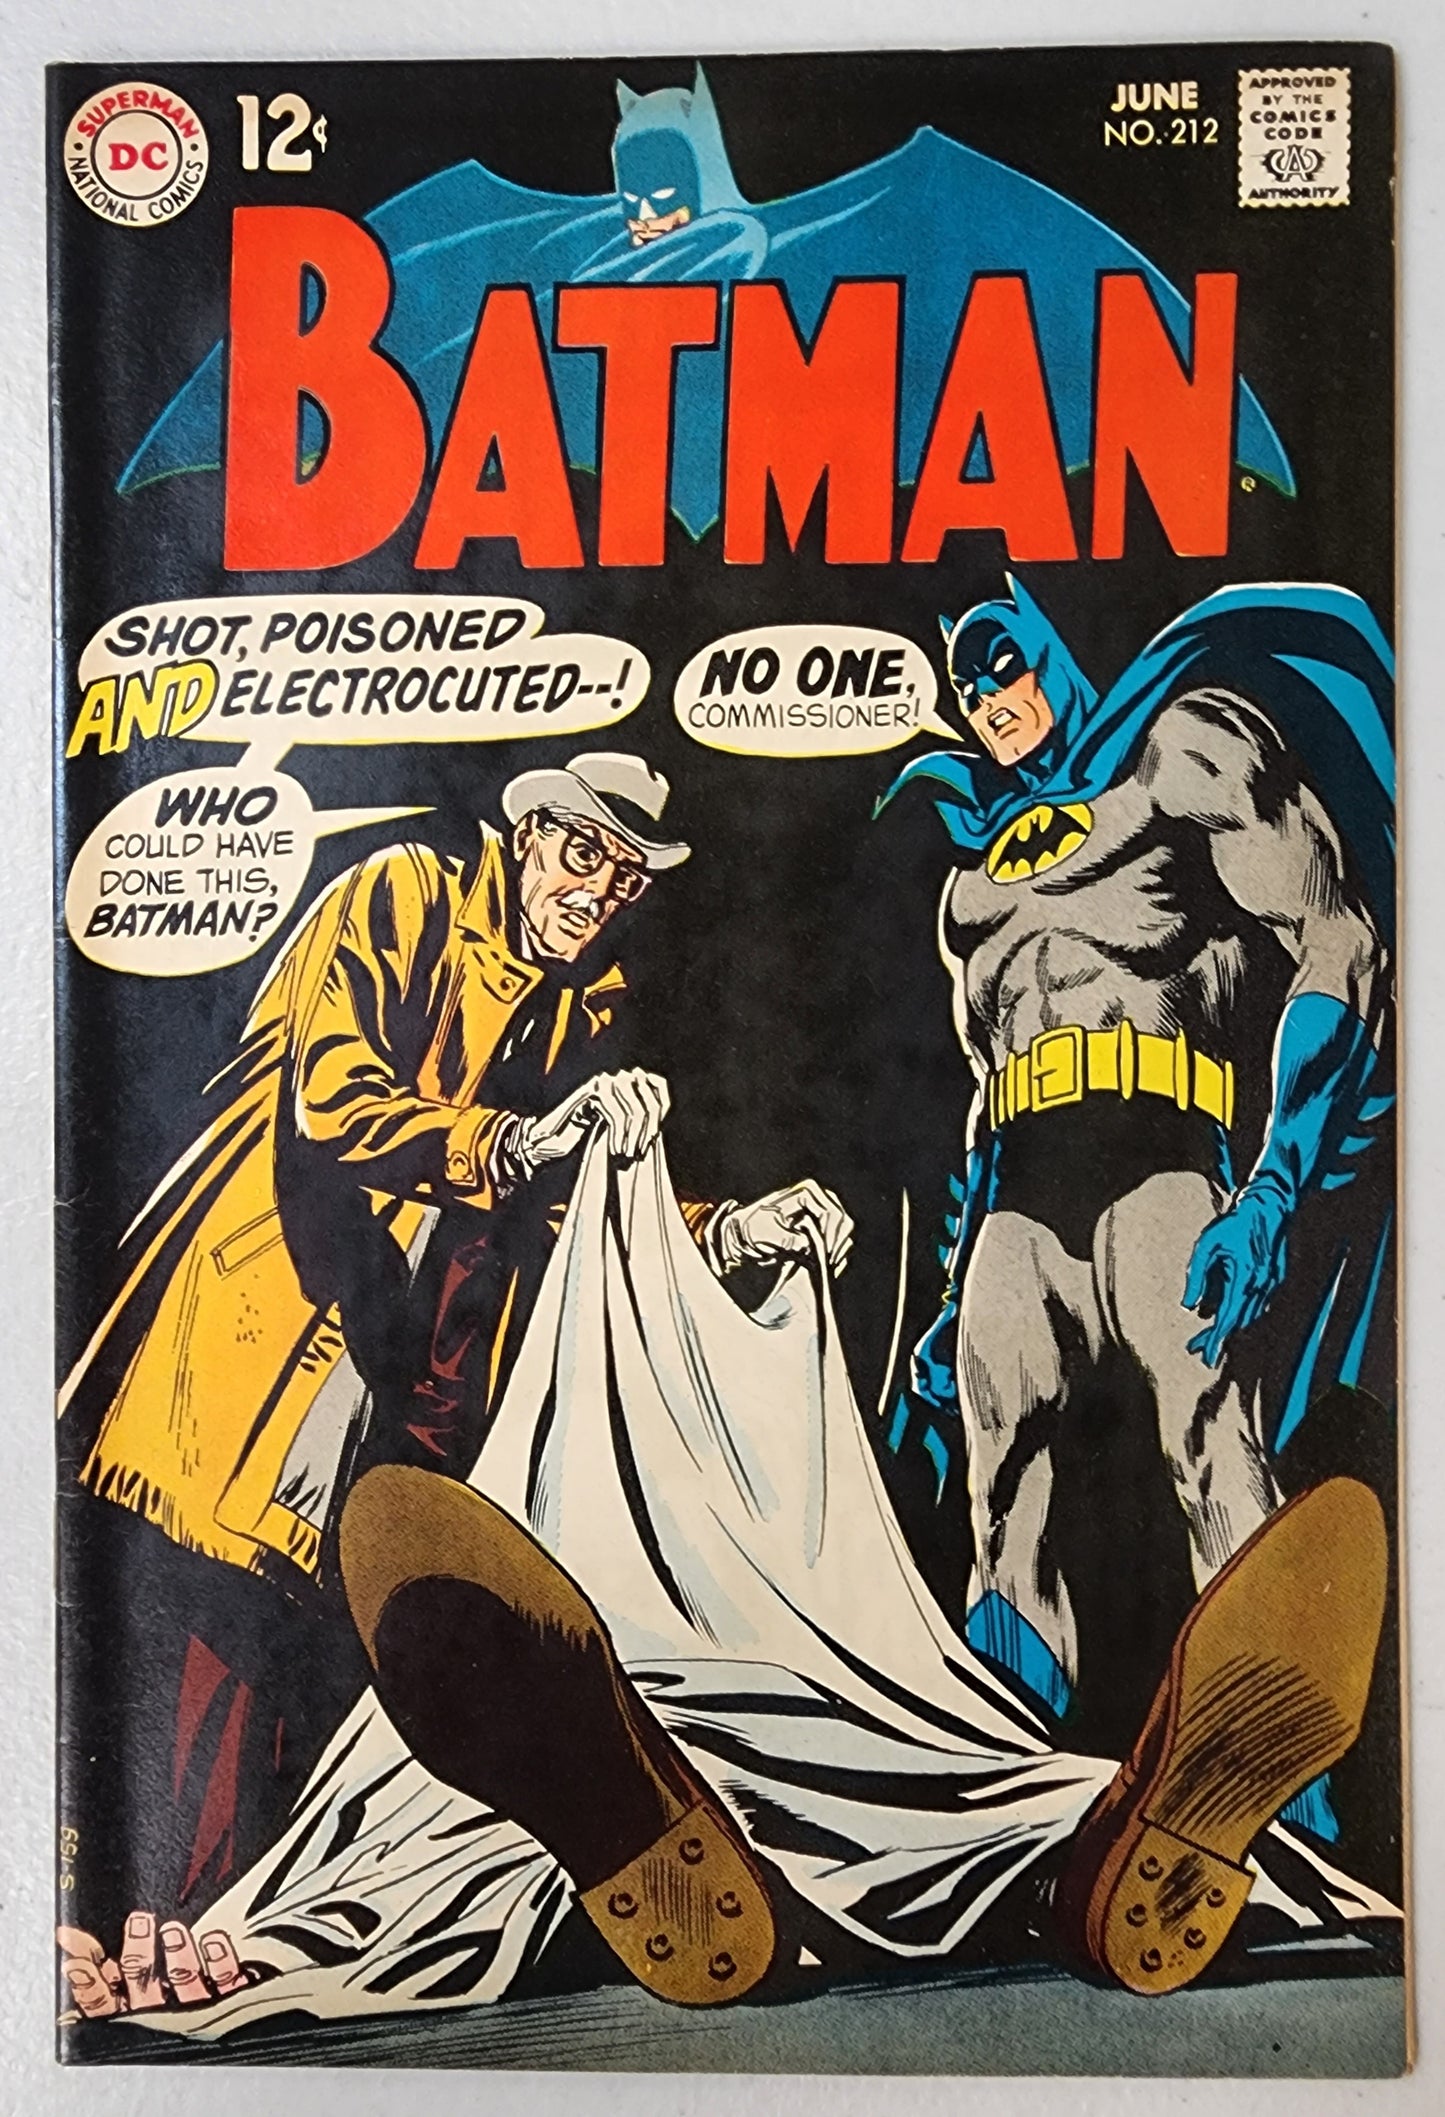 BATMAN #212 (LAST $0.12 ISSUE) 1969  DC COMICS   